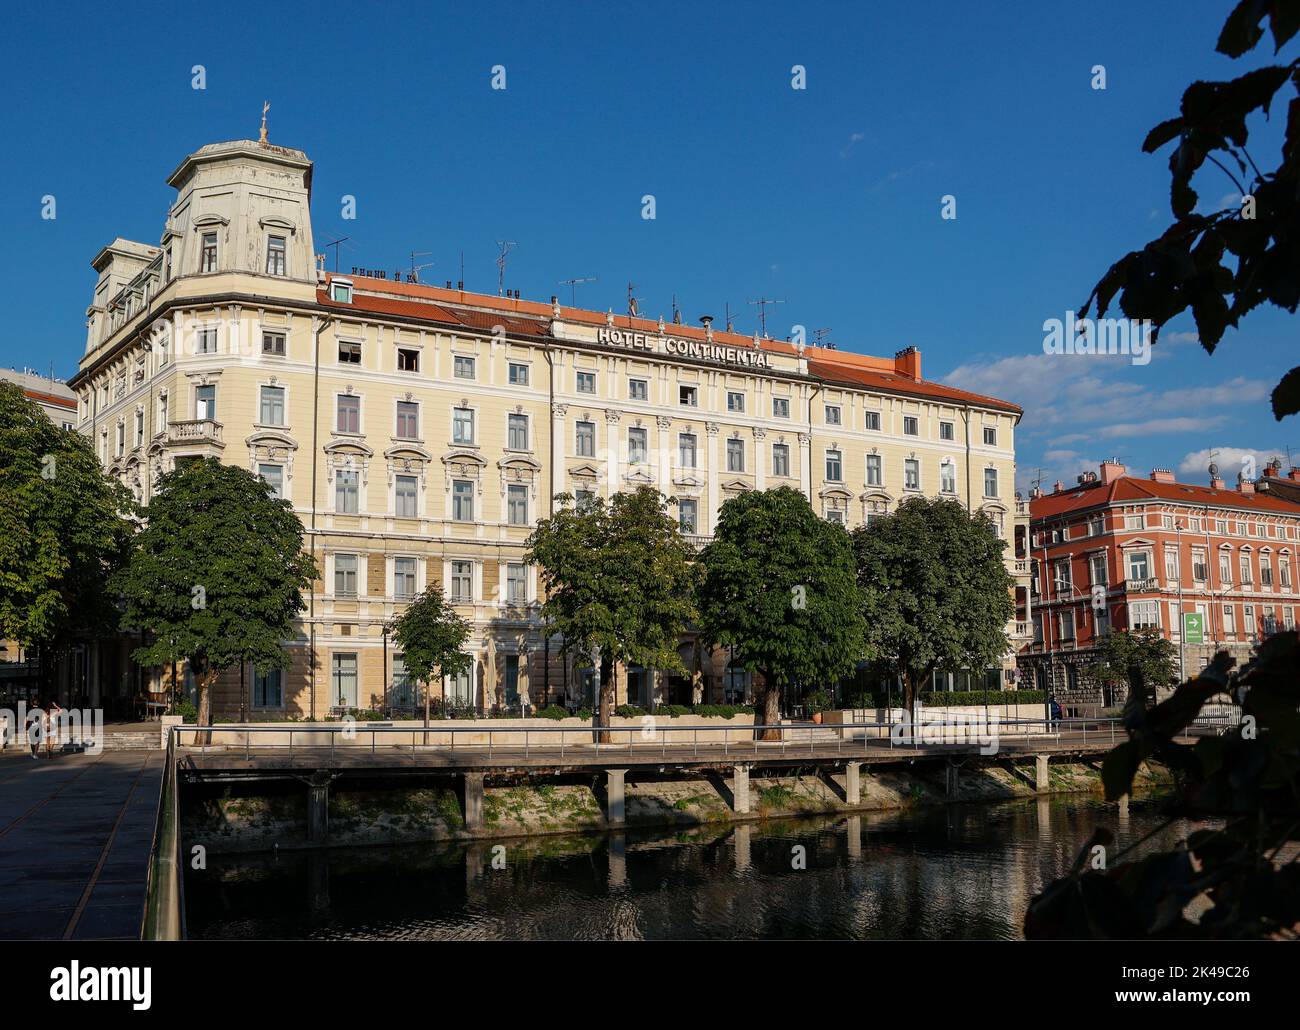 Hotel Continetal in Rijeka,Croatia, Europe Stock Photo